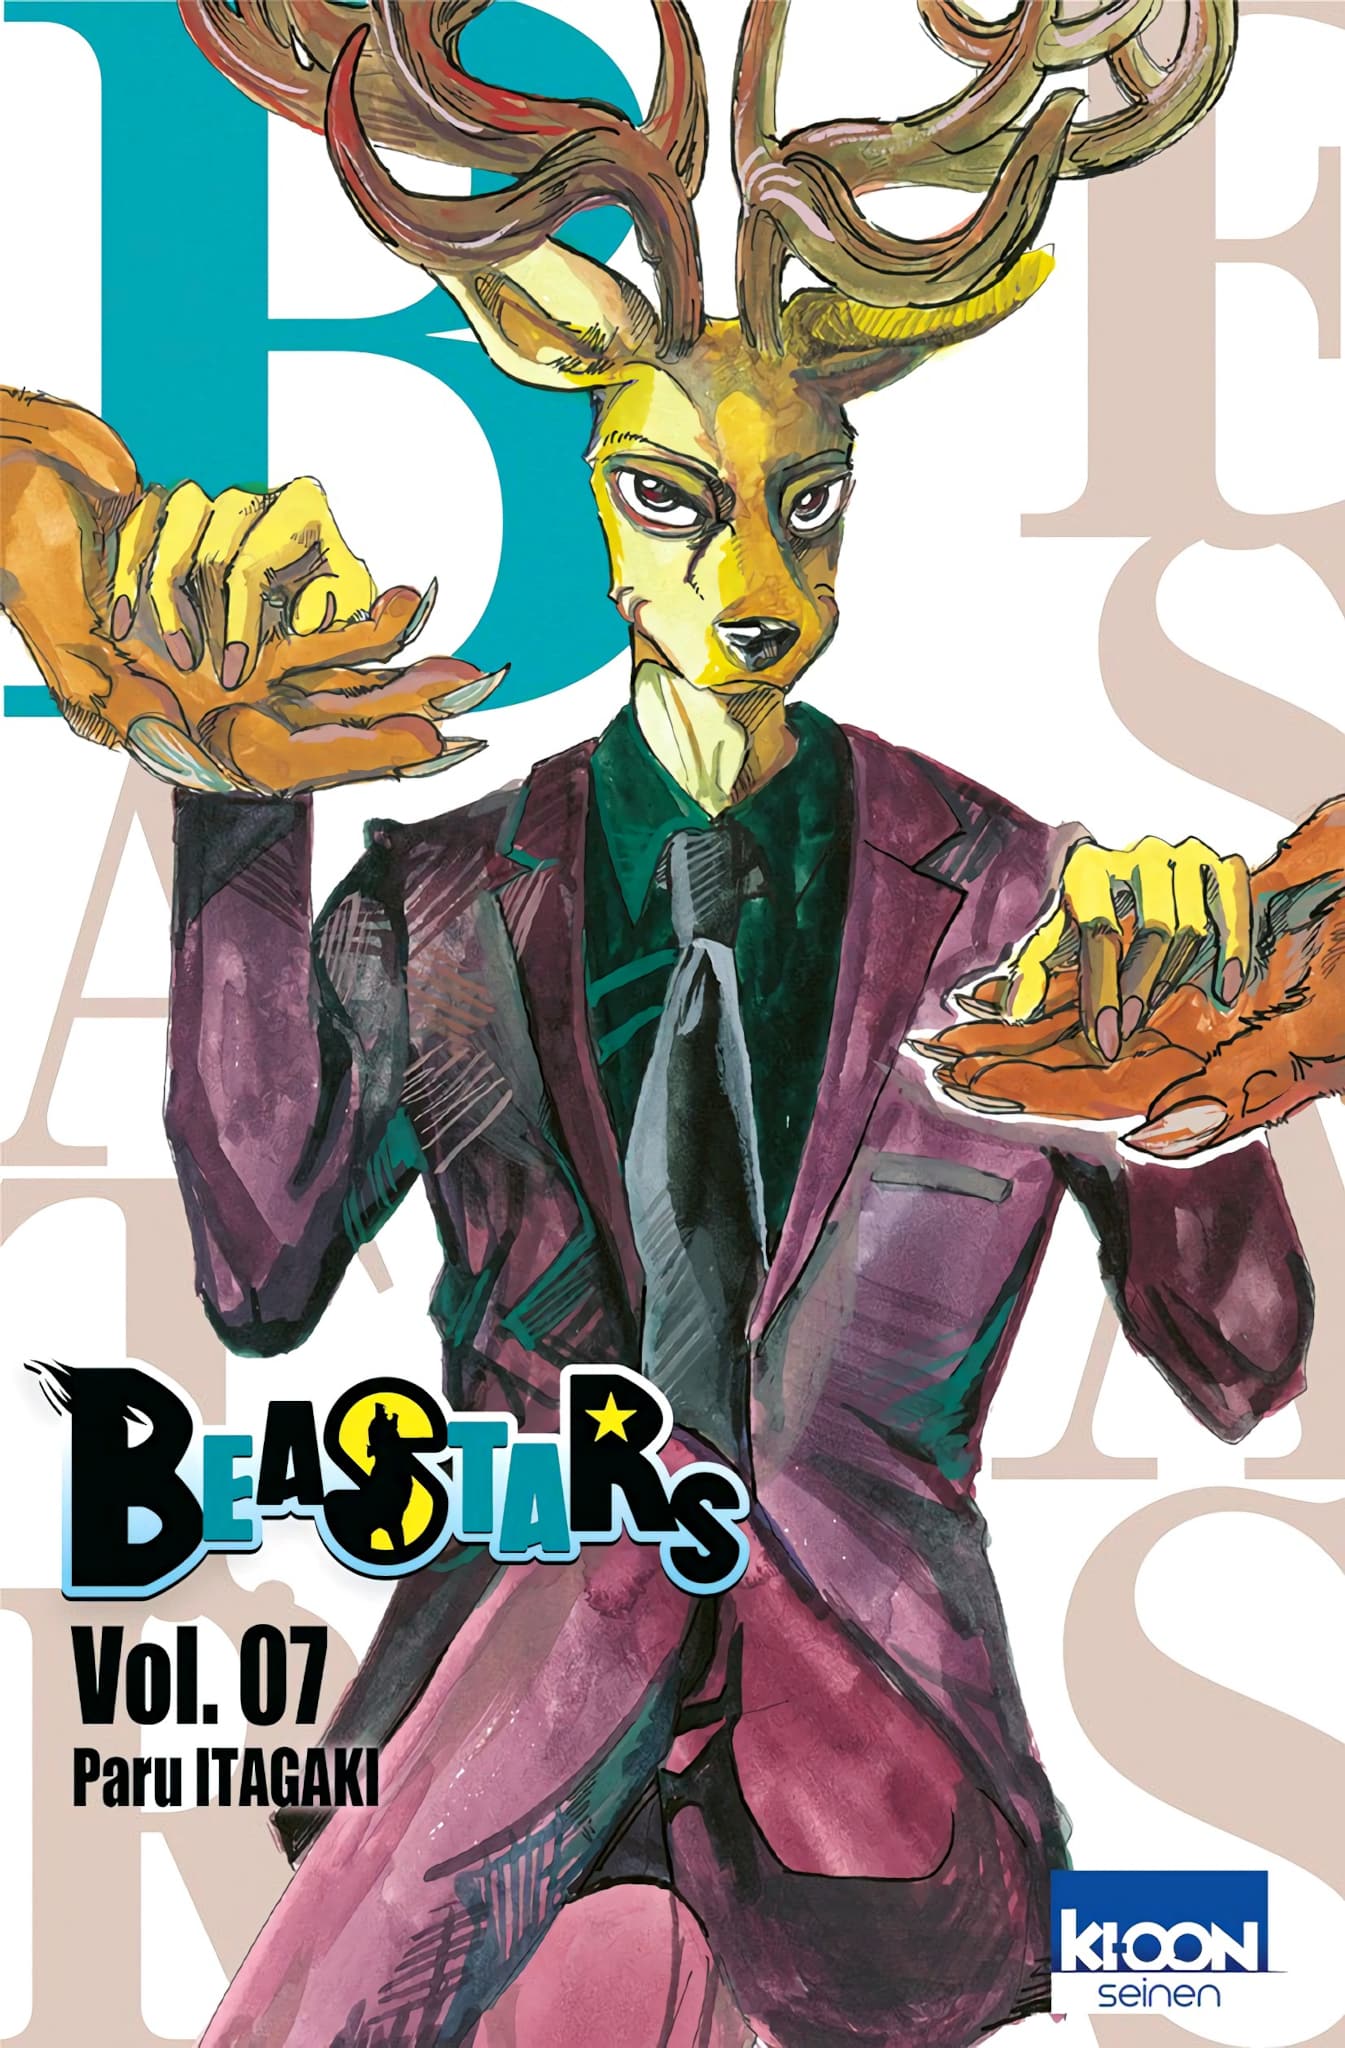 Tome 7 du manga Beastars